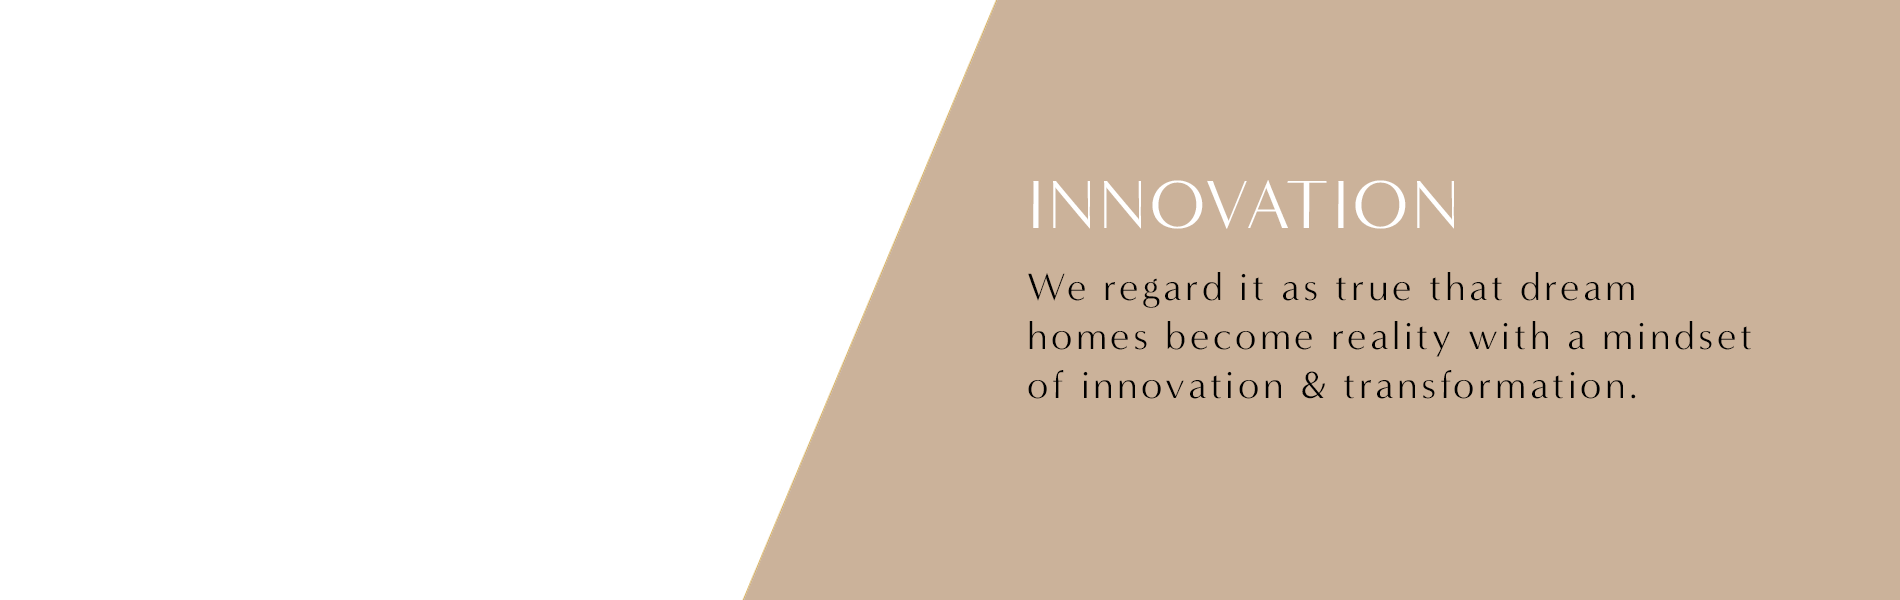 Our values slider - Innovation